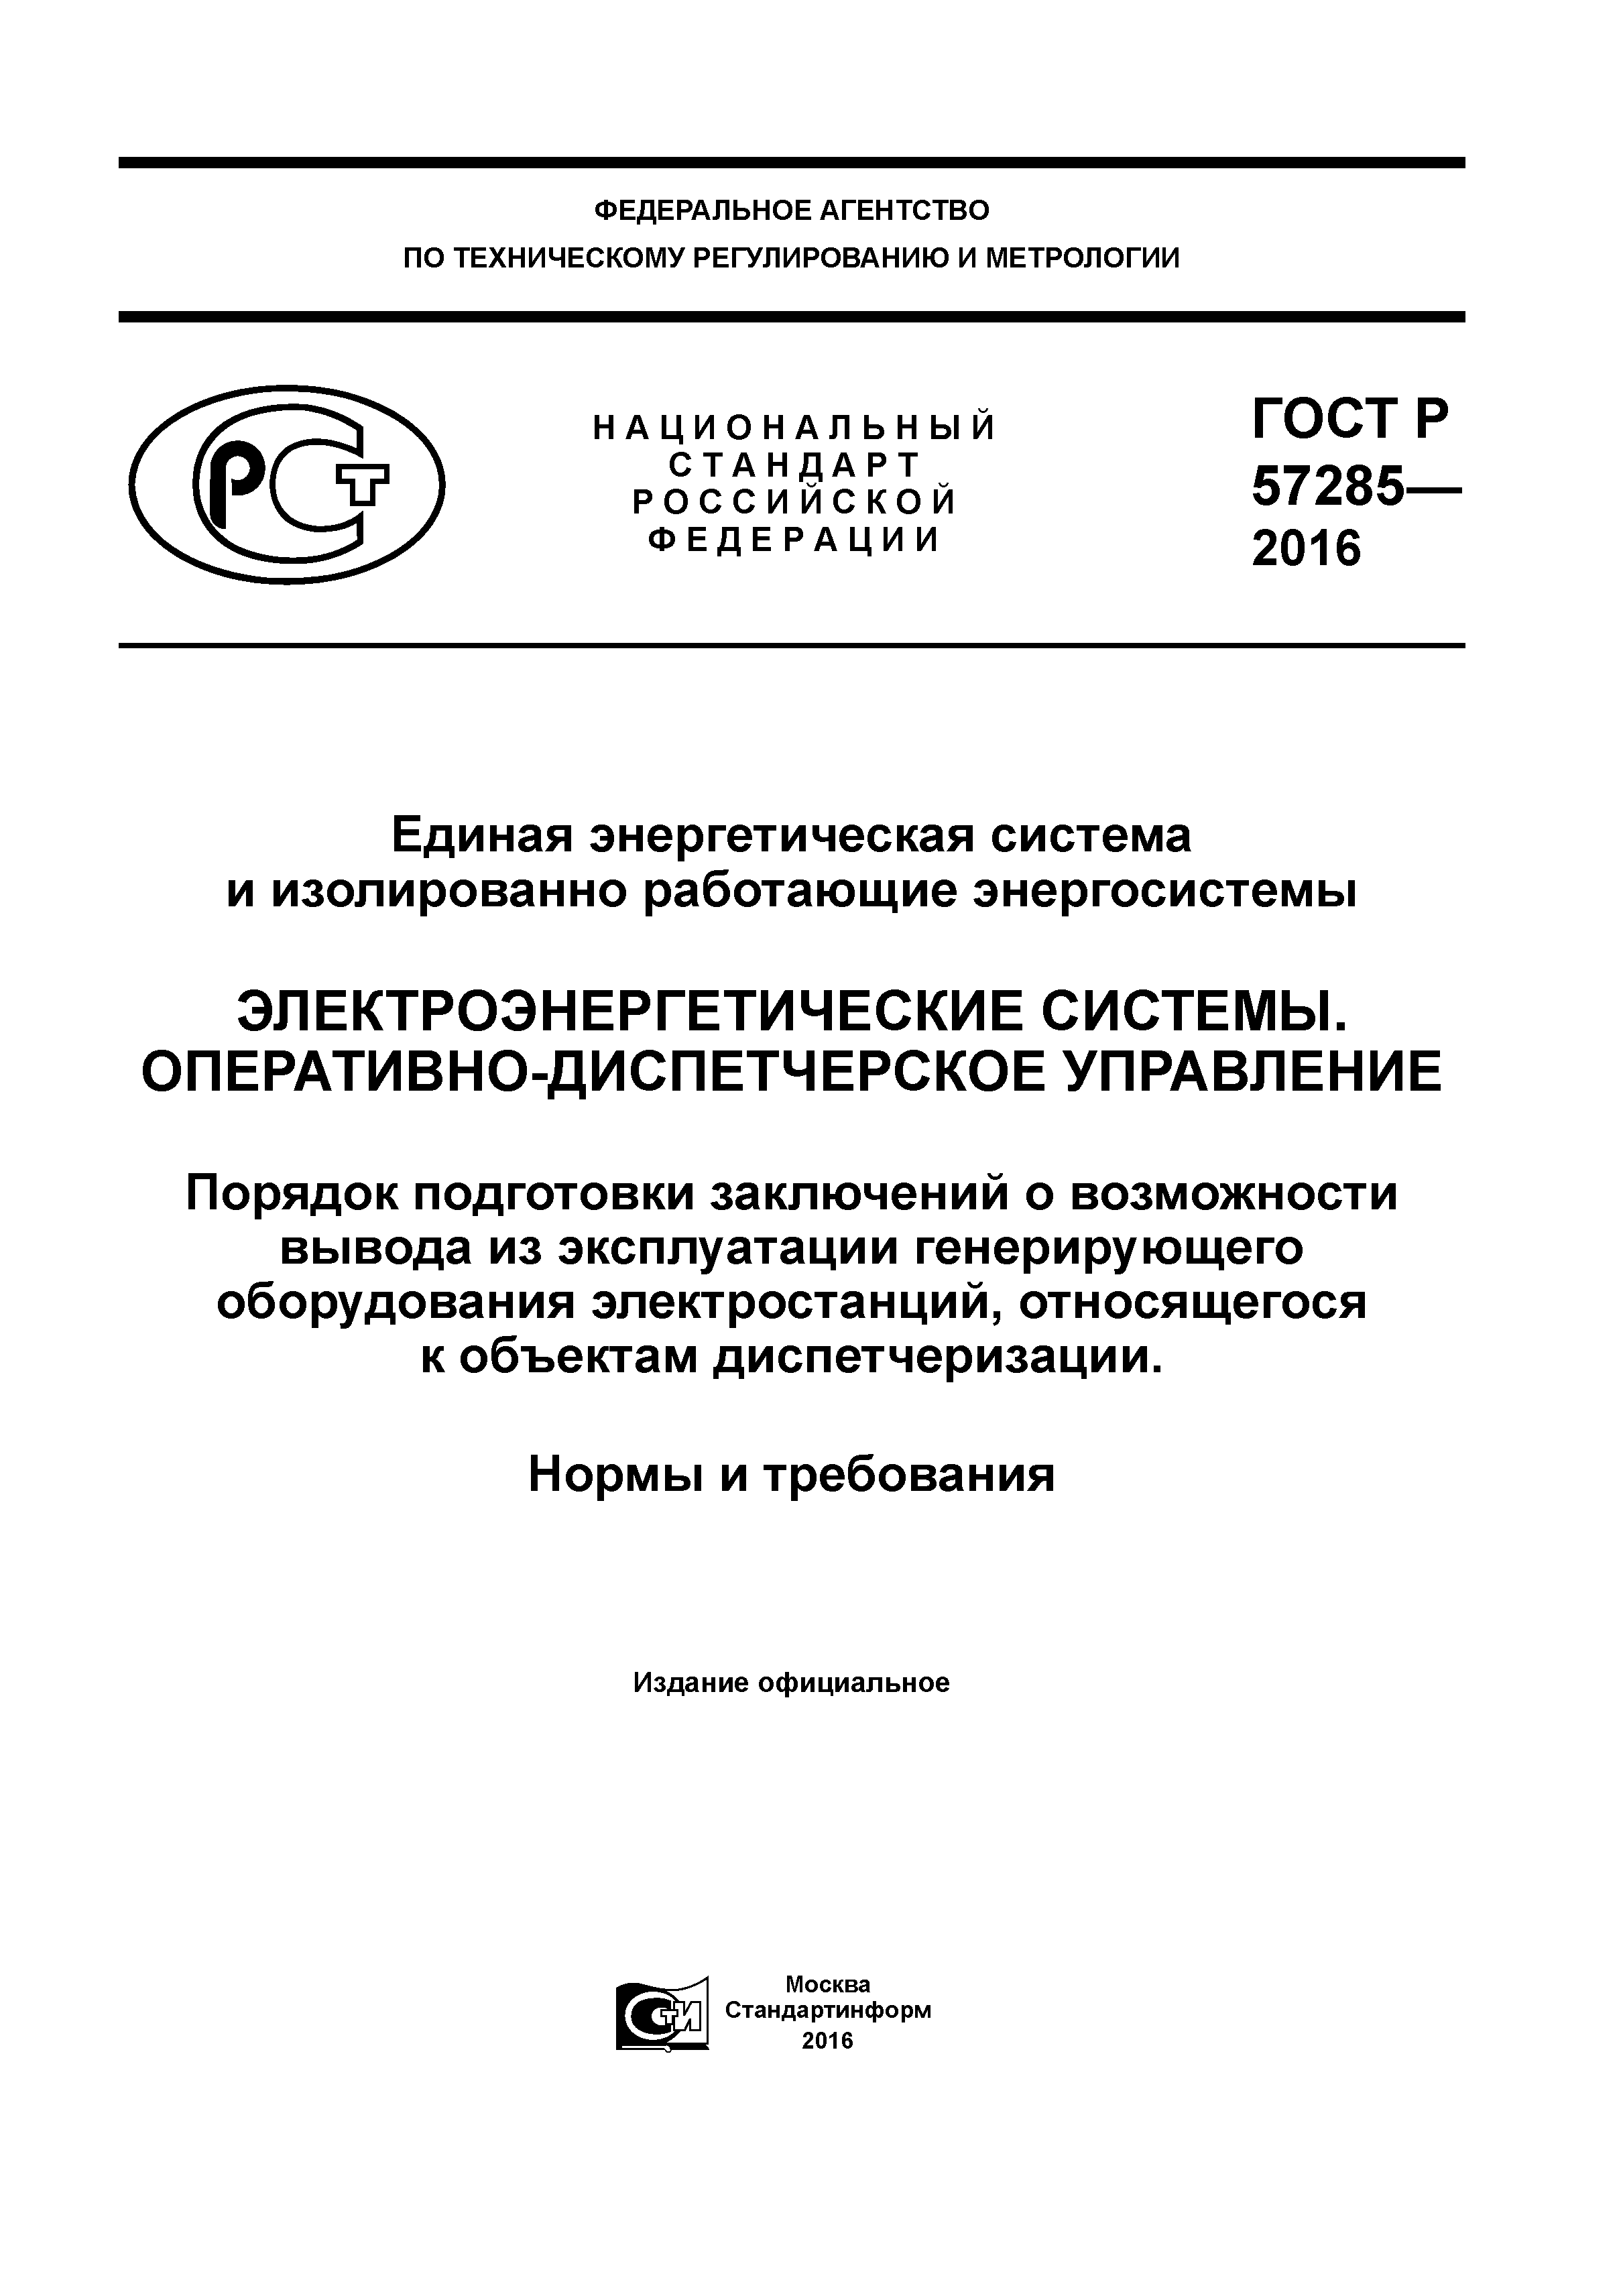 ГОСТ Р 57285-2016